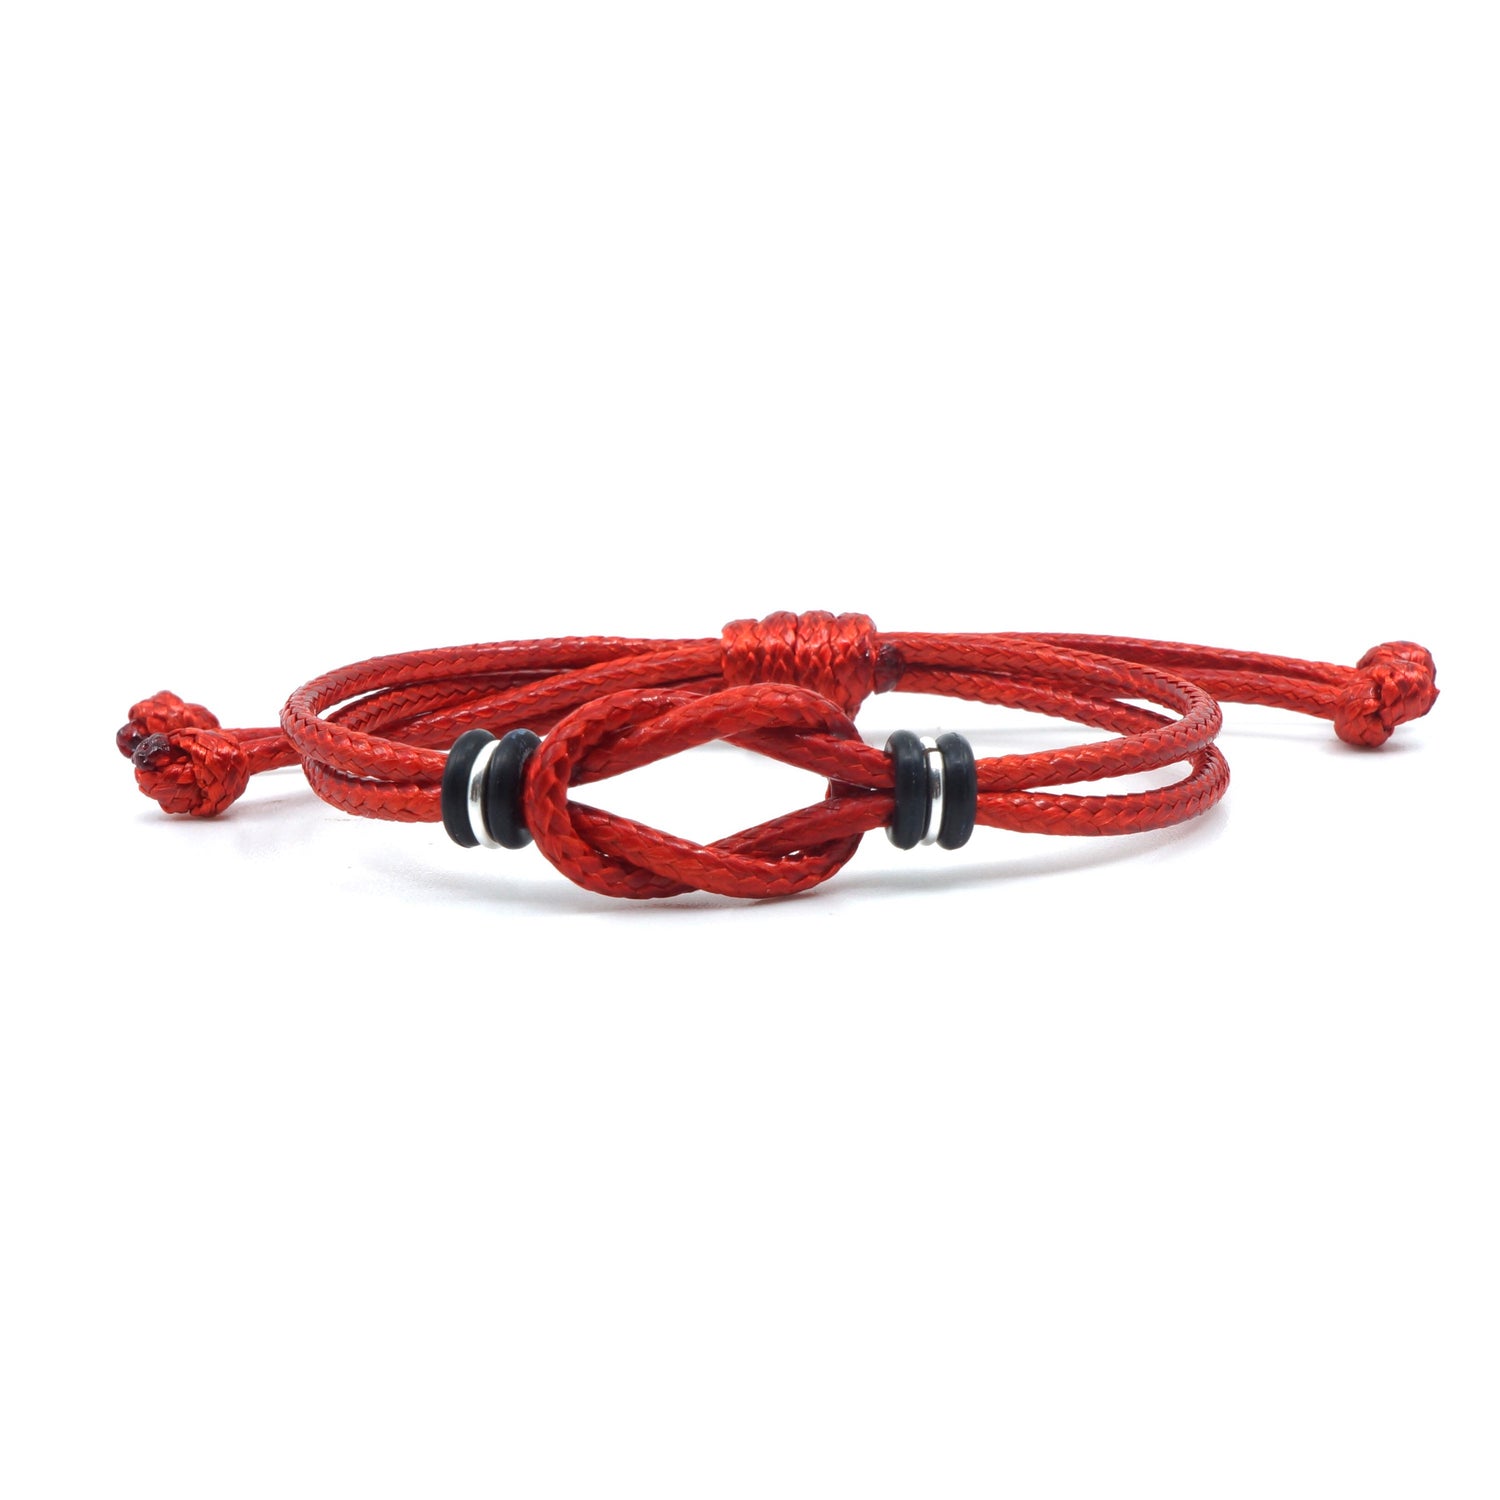 Celtic Knot Bracelet, Red Waxed Cord Bracelet, Boys Bracelet, Adjustable Bracelet, Infinity Bracelet, Unisex, Family Bracelets